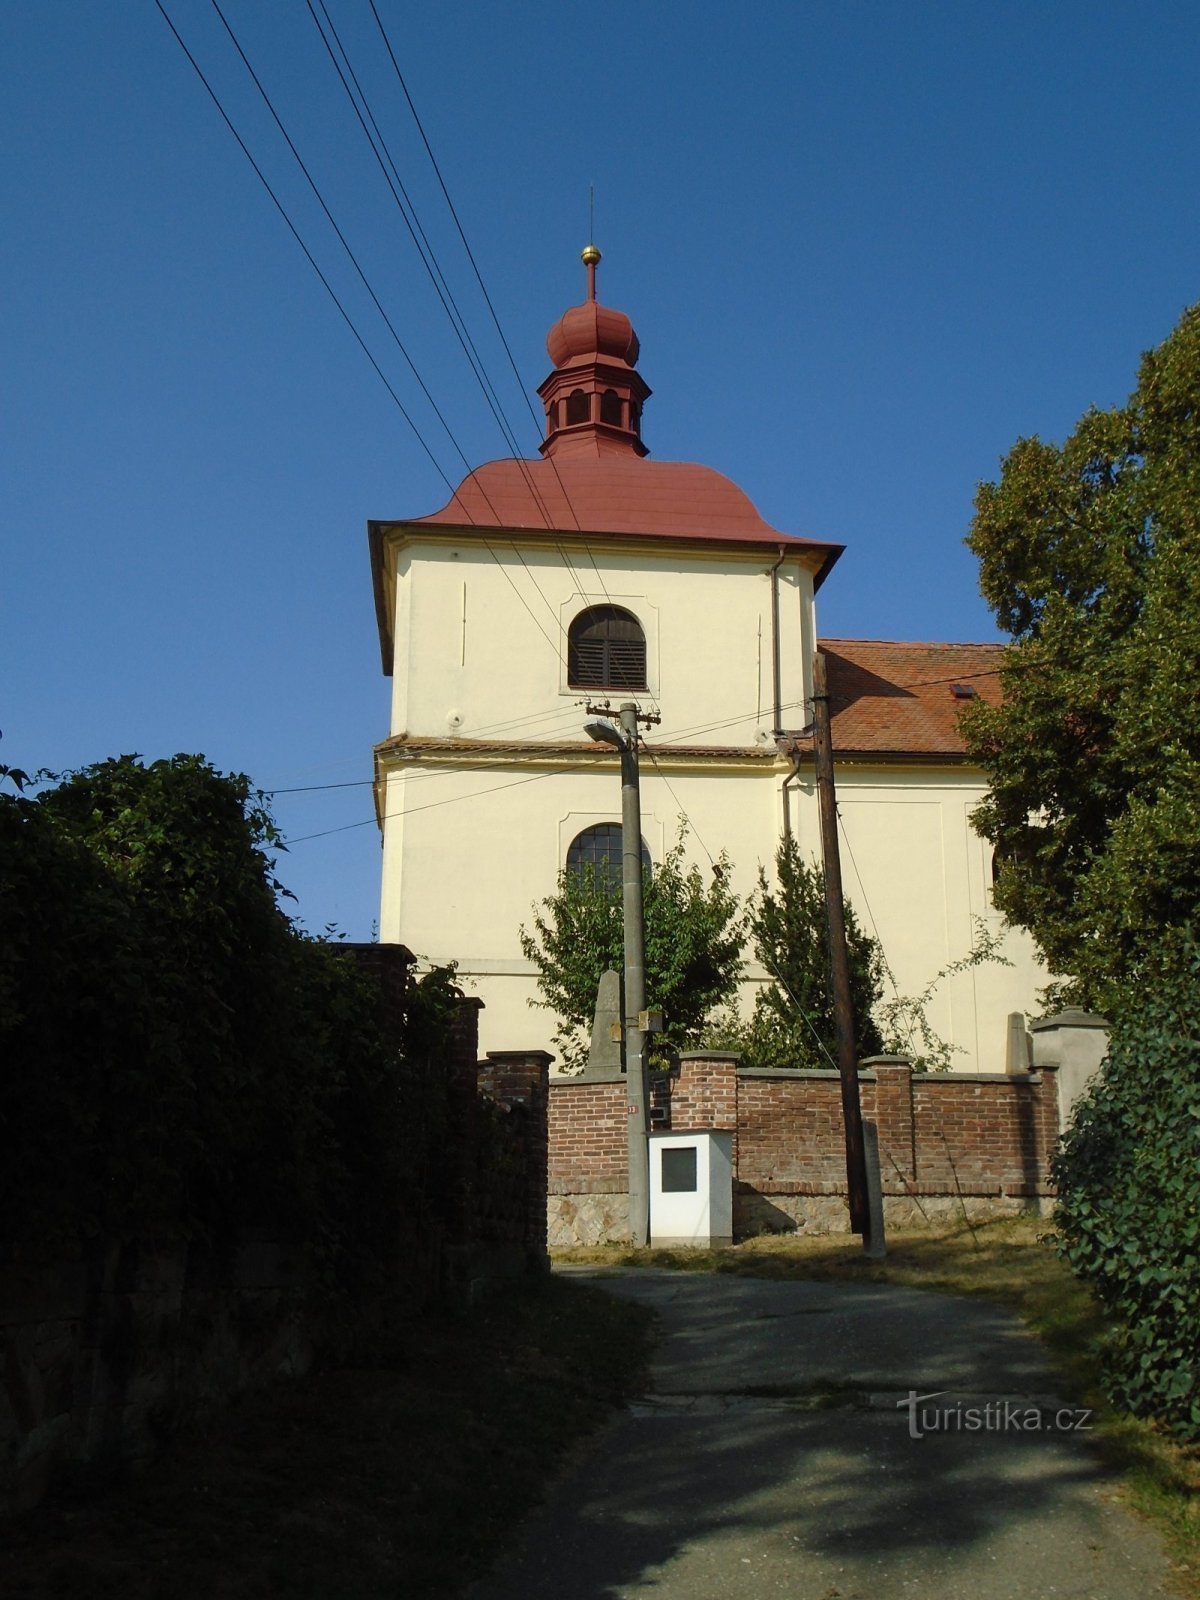 Cerkev sv. Stanislava (Sendražice, 27.8.2018. XNUMX. XNUMX)